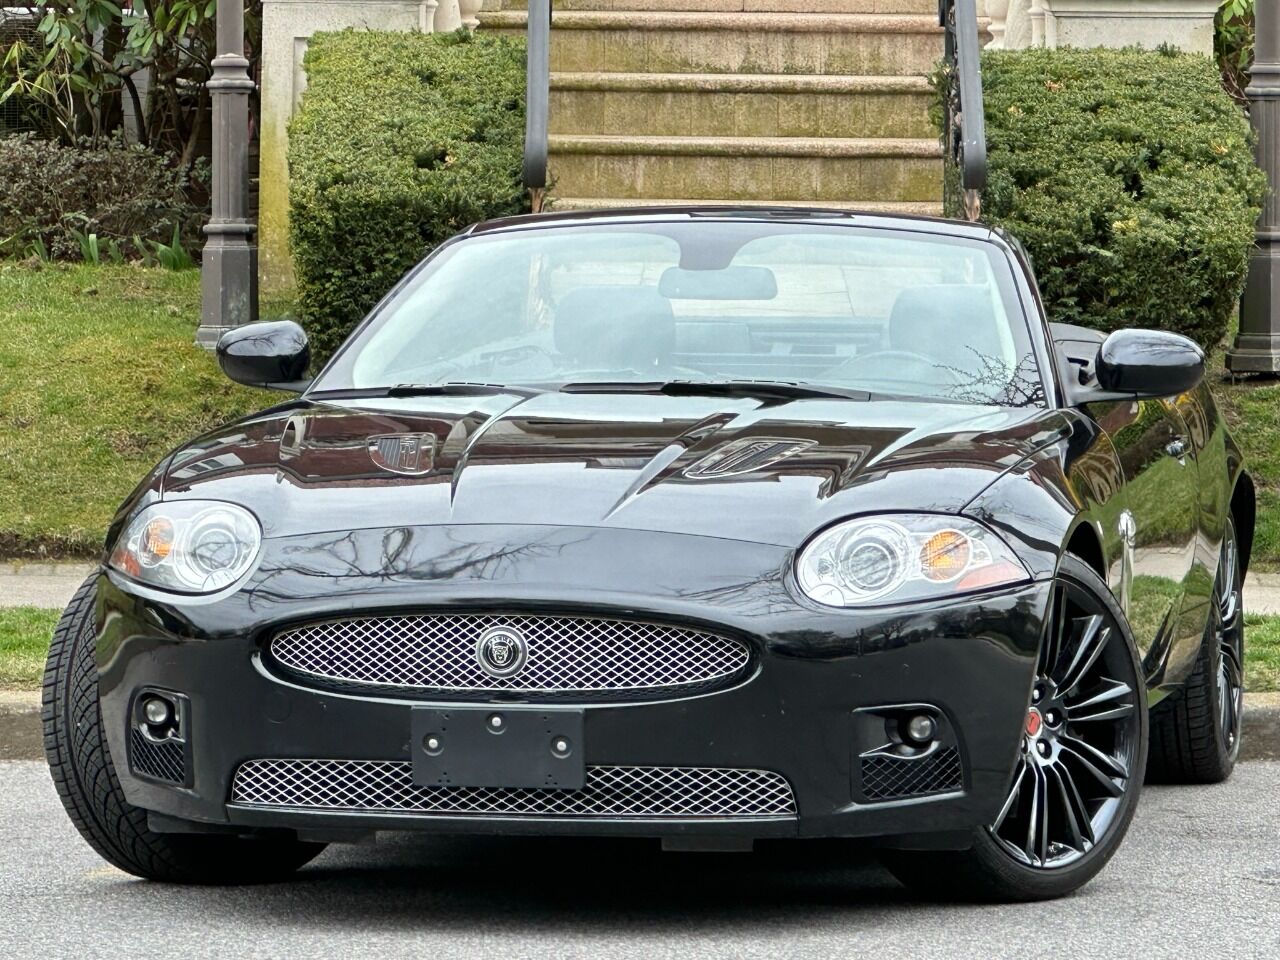 2009 Jaguar XK Convertible - $25,900